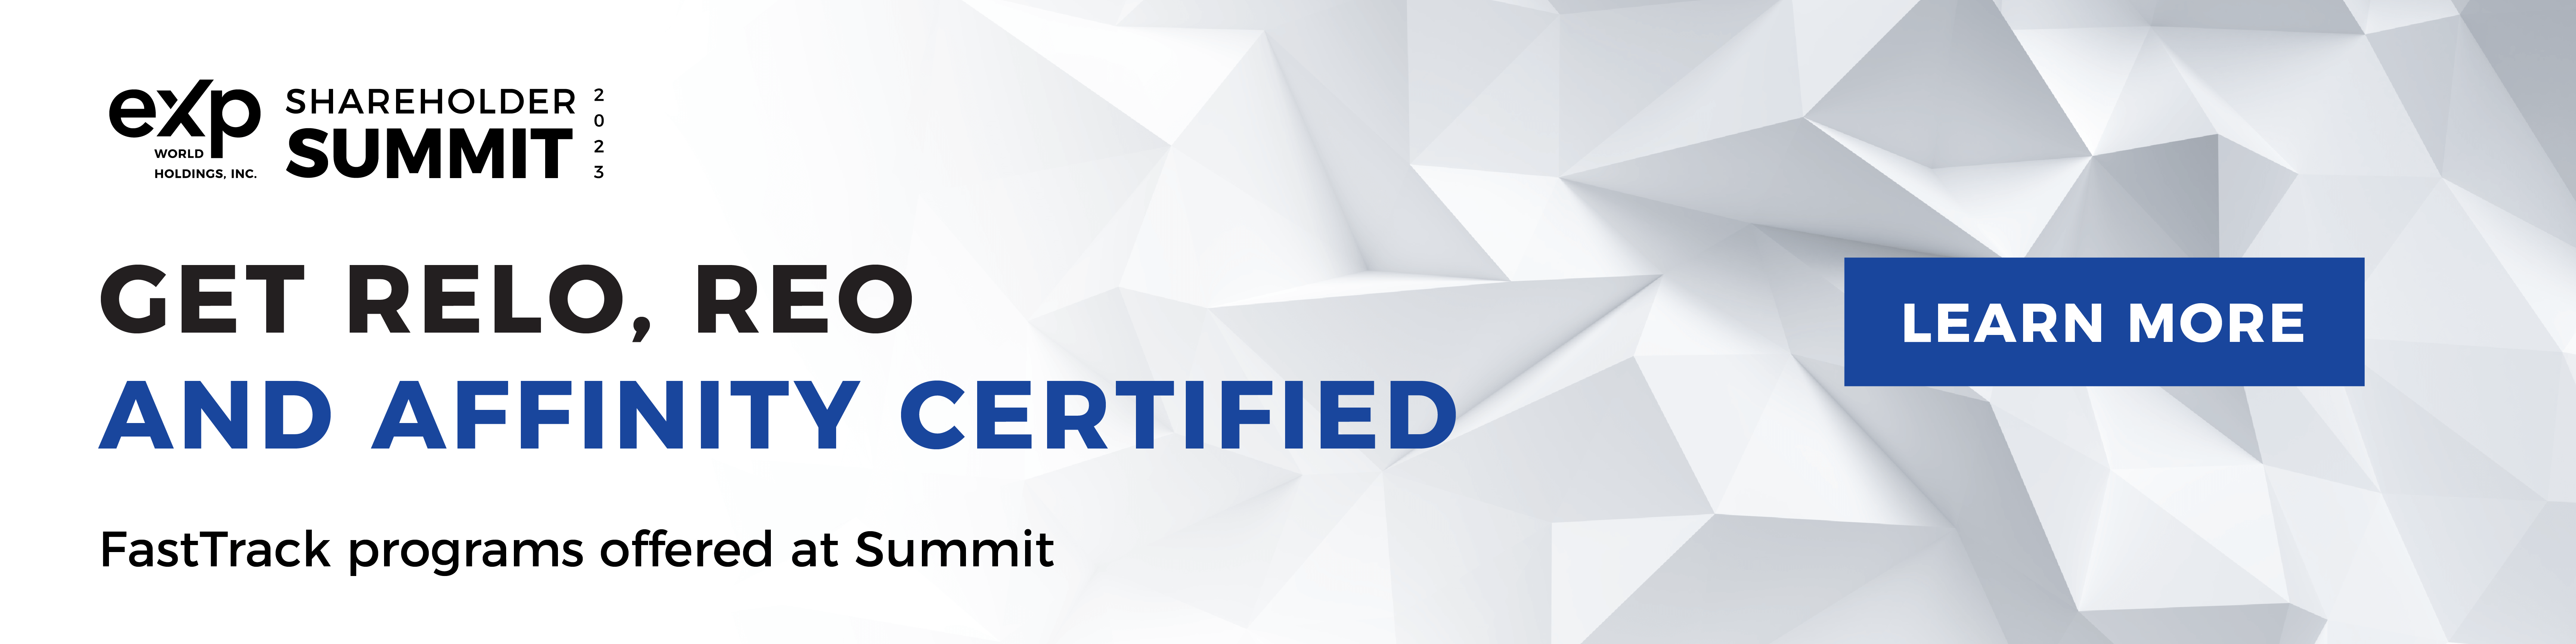 certifications eXp Shareholder Summit